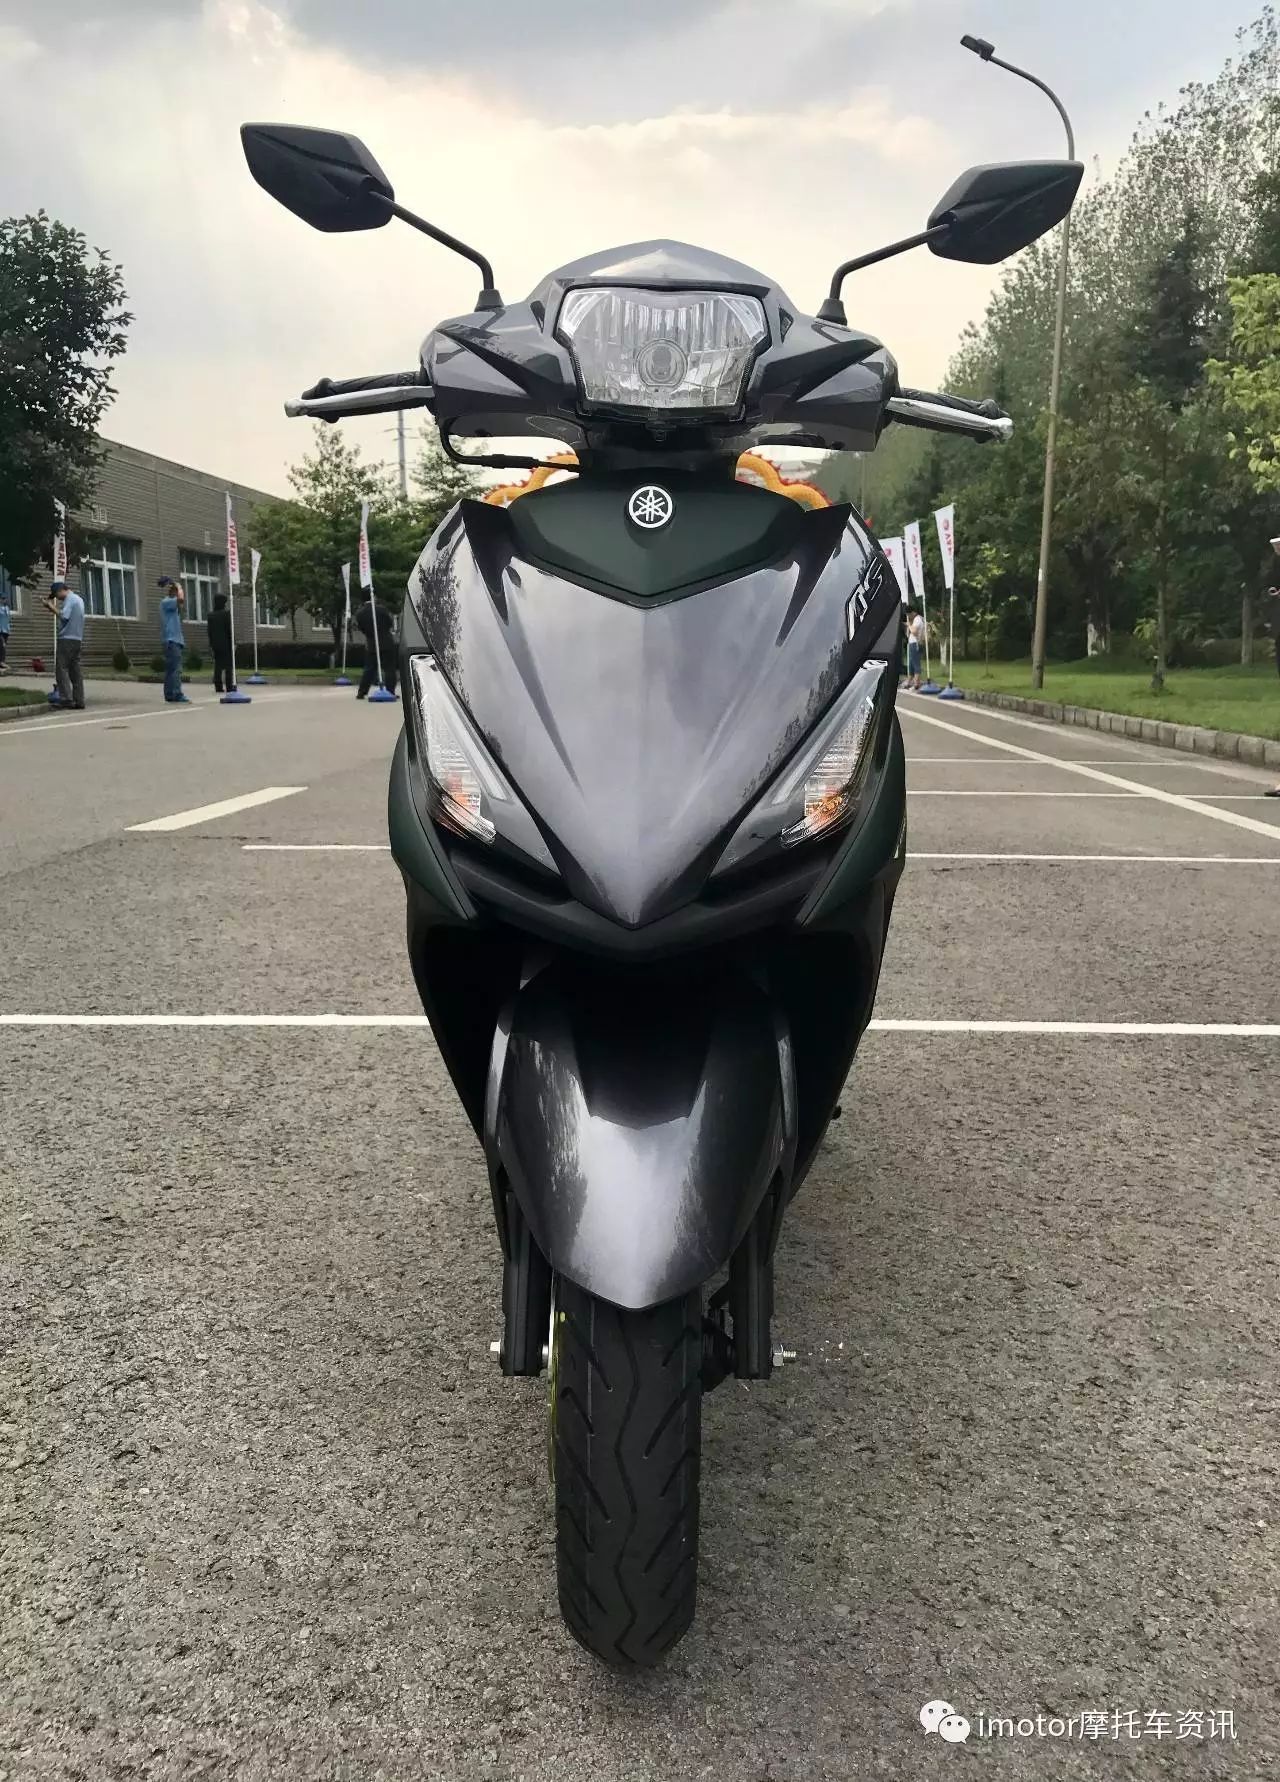 Imotor摩托车资讯 自由微信 Freewechat